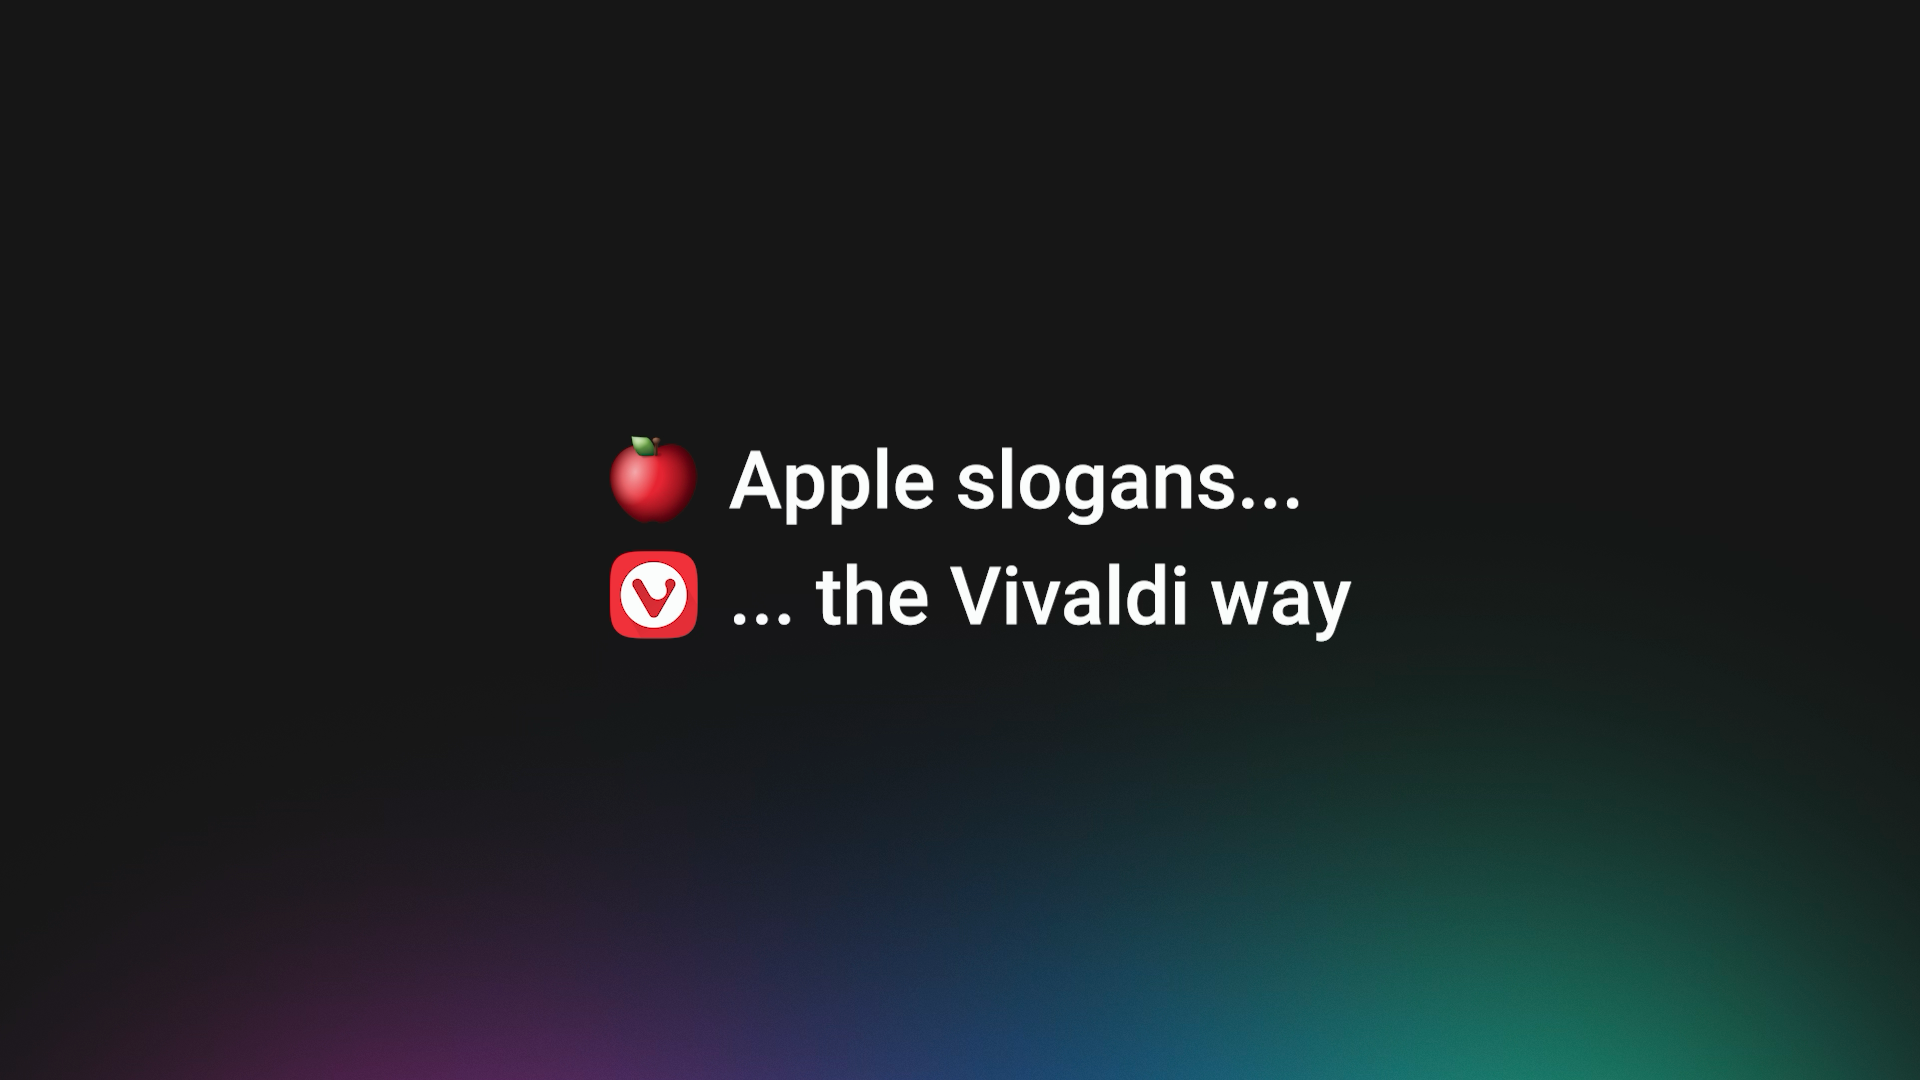 download the last version for apple Vivaldi 6.1.3035.204